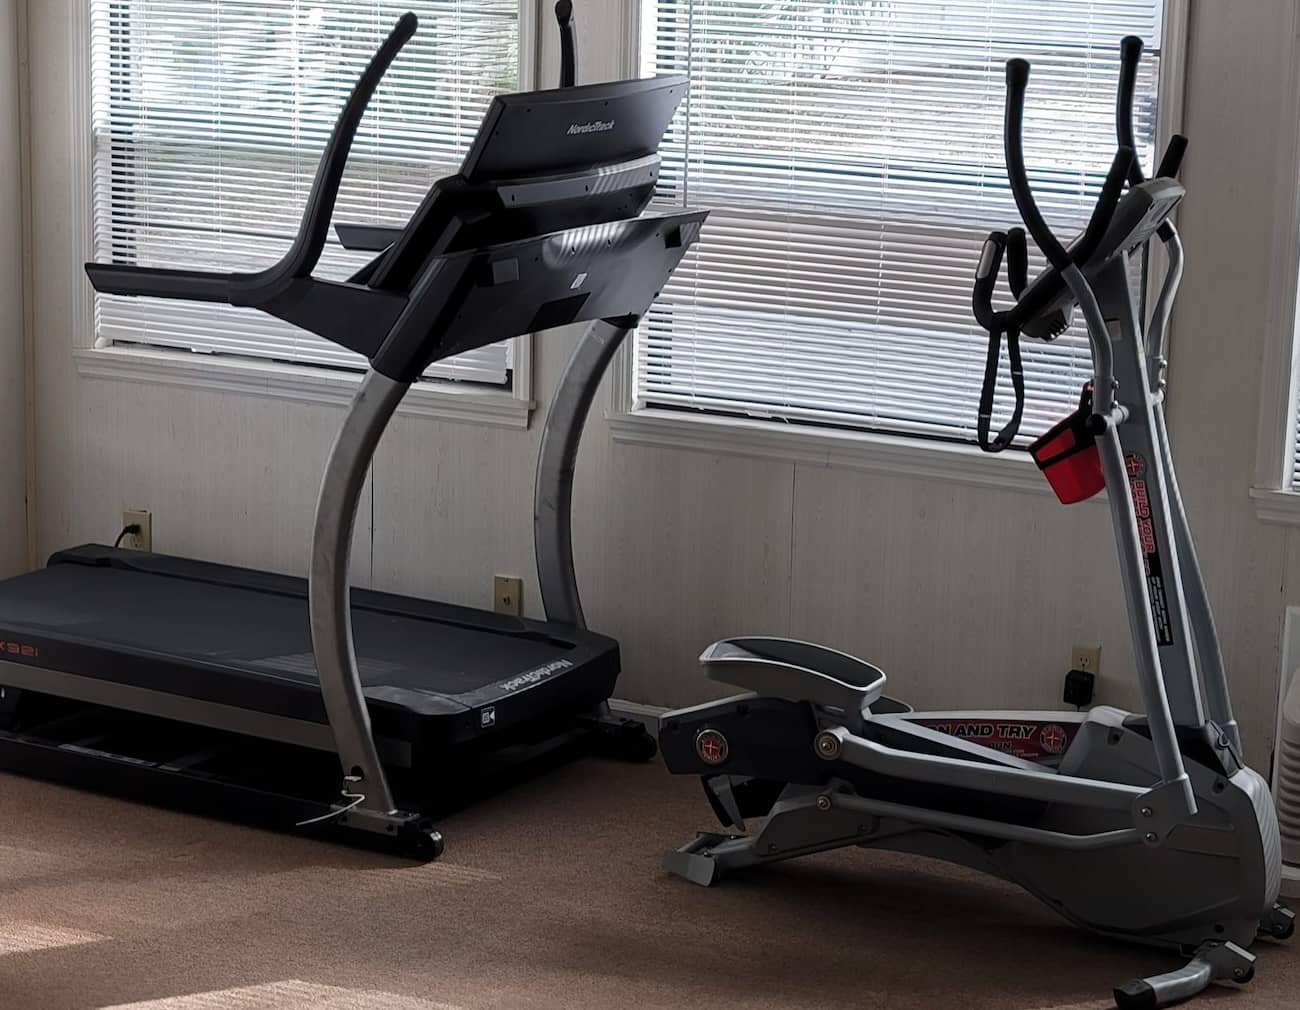 exercise bike or treadmill